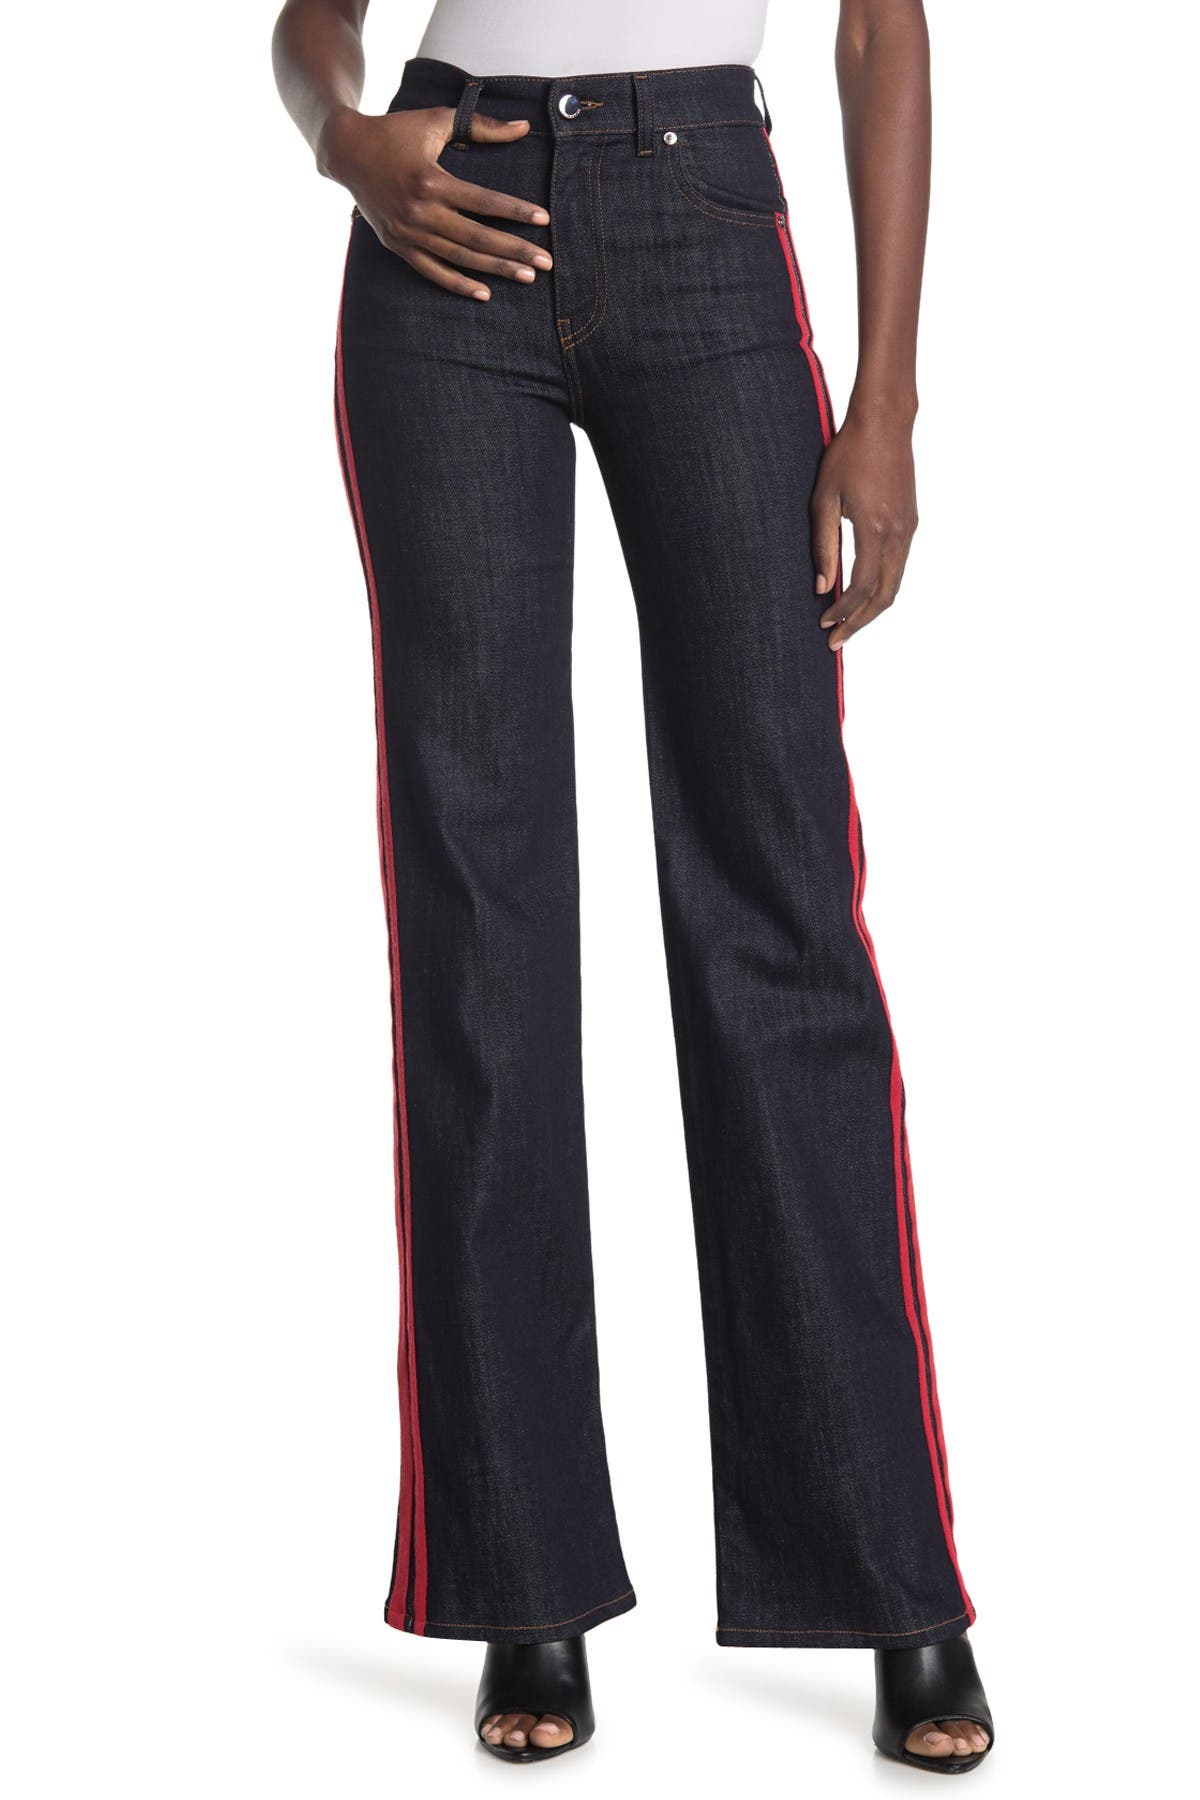 Red Valentino Flared Jeans In Blue Denim 518